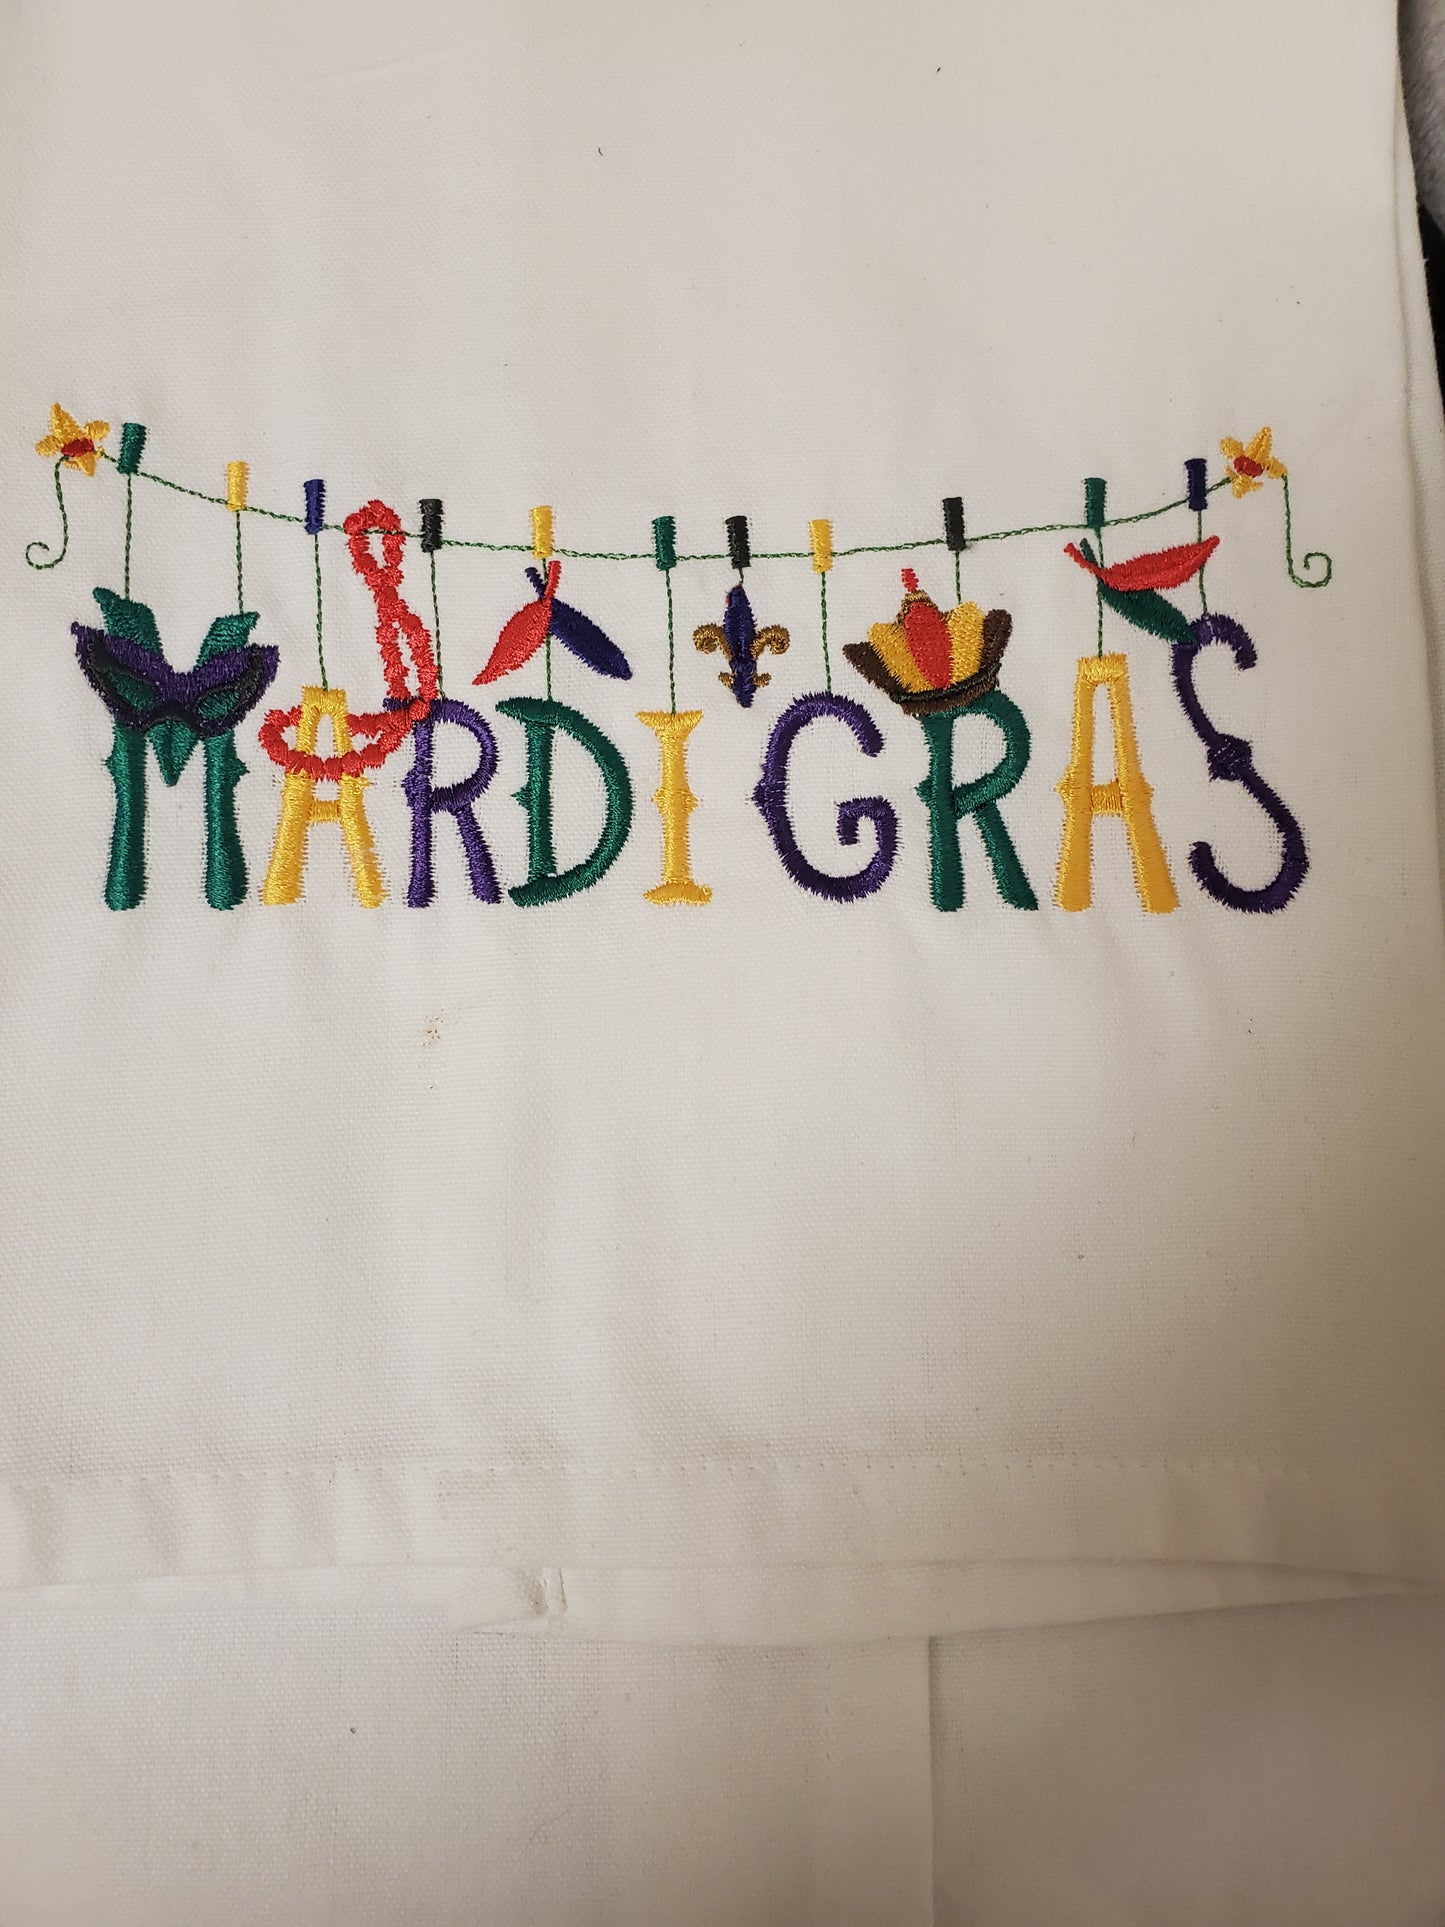 Mardi Gras Hand Towel